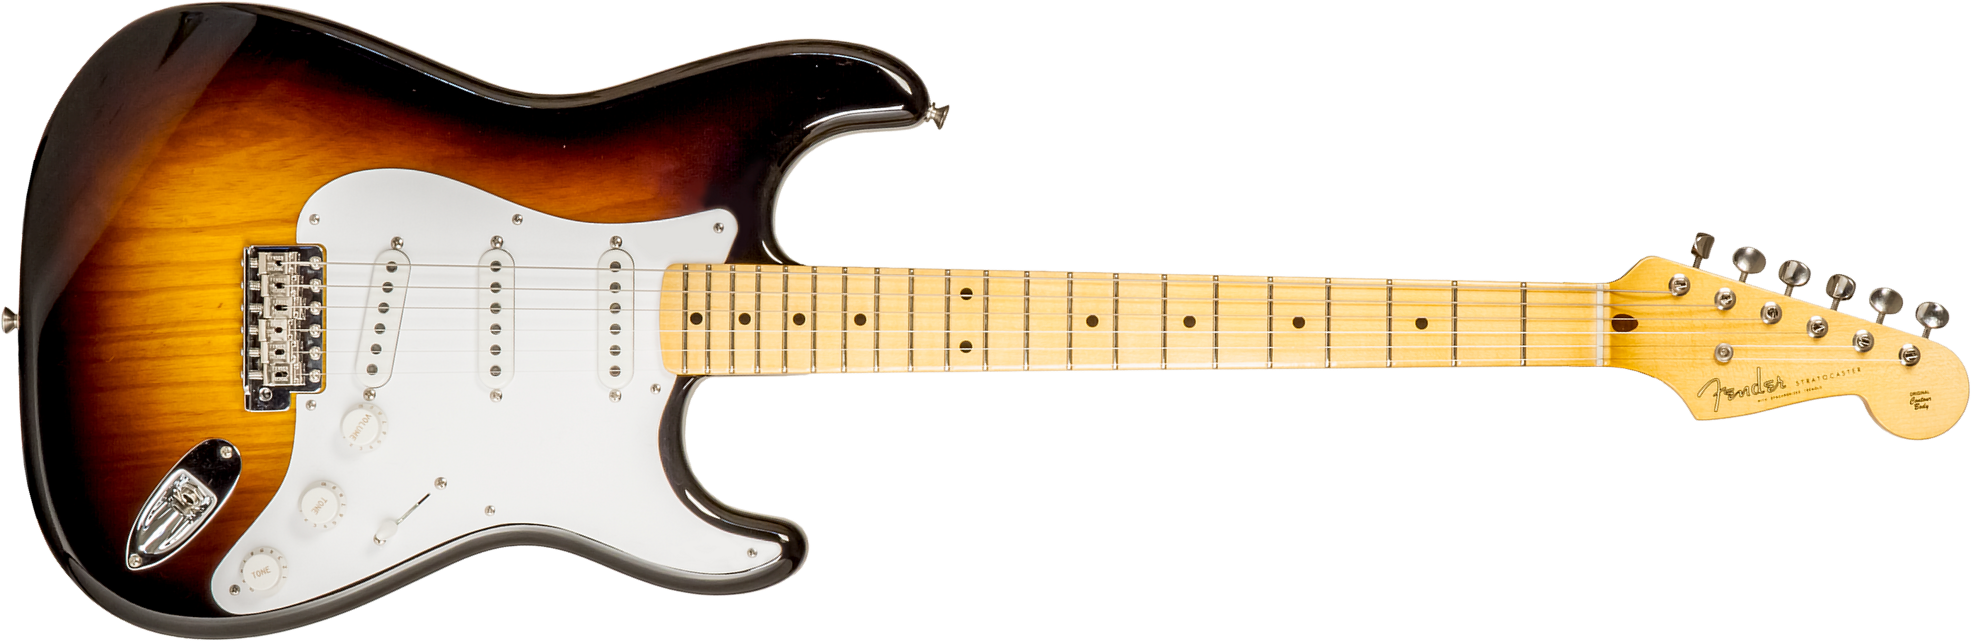 Fender Custom Shop Strat 1954 70th Anniv. #xn4597 3s Trem Mn - Time Capsule 2-color Sunburst - Str shape electric guitar - Main picture